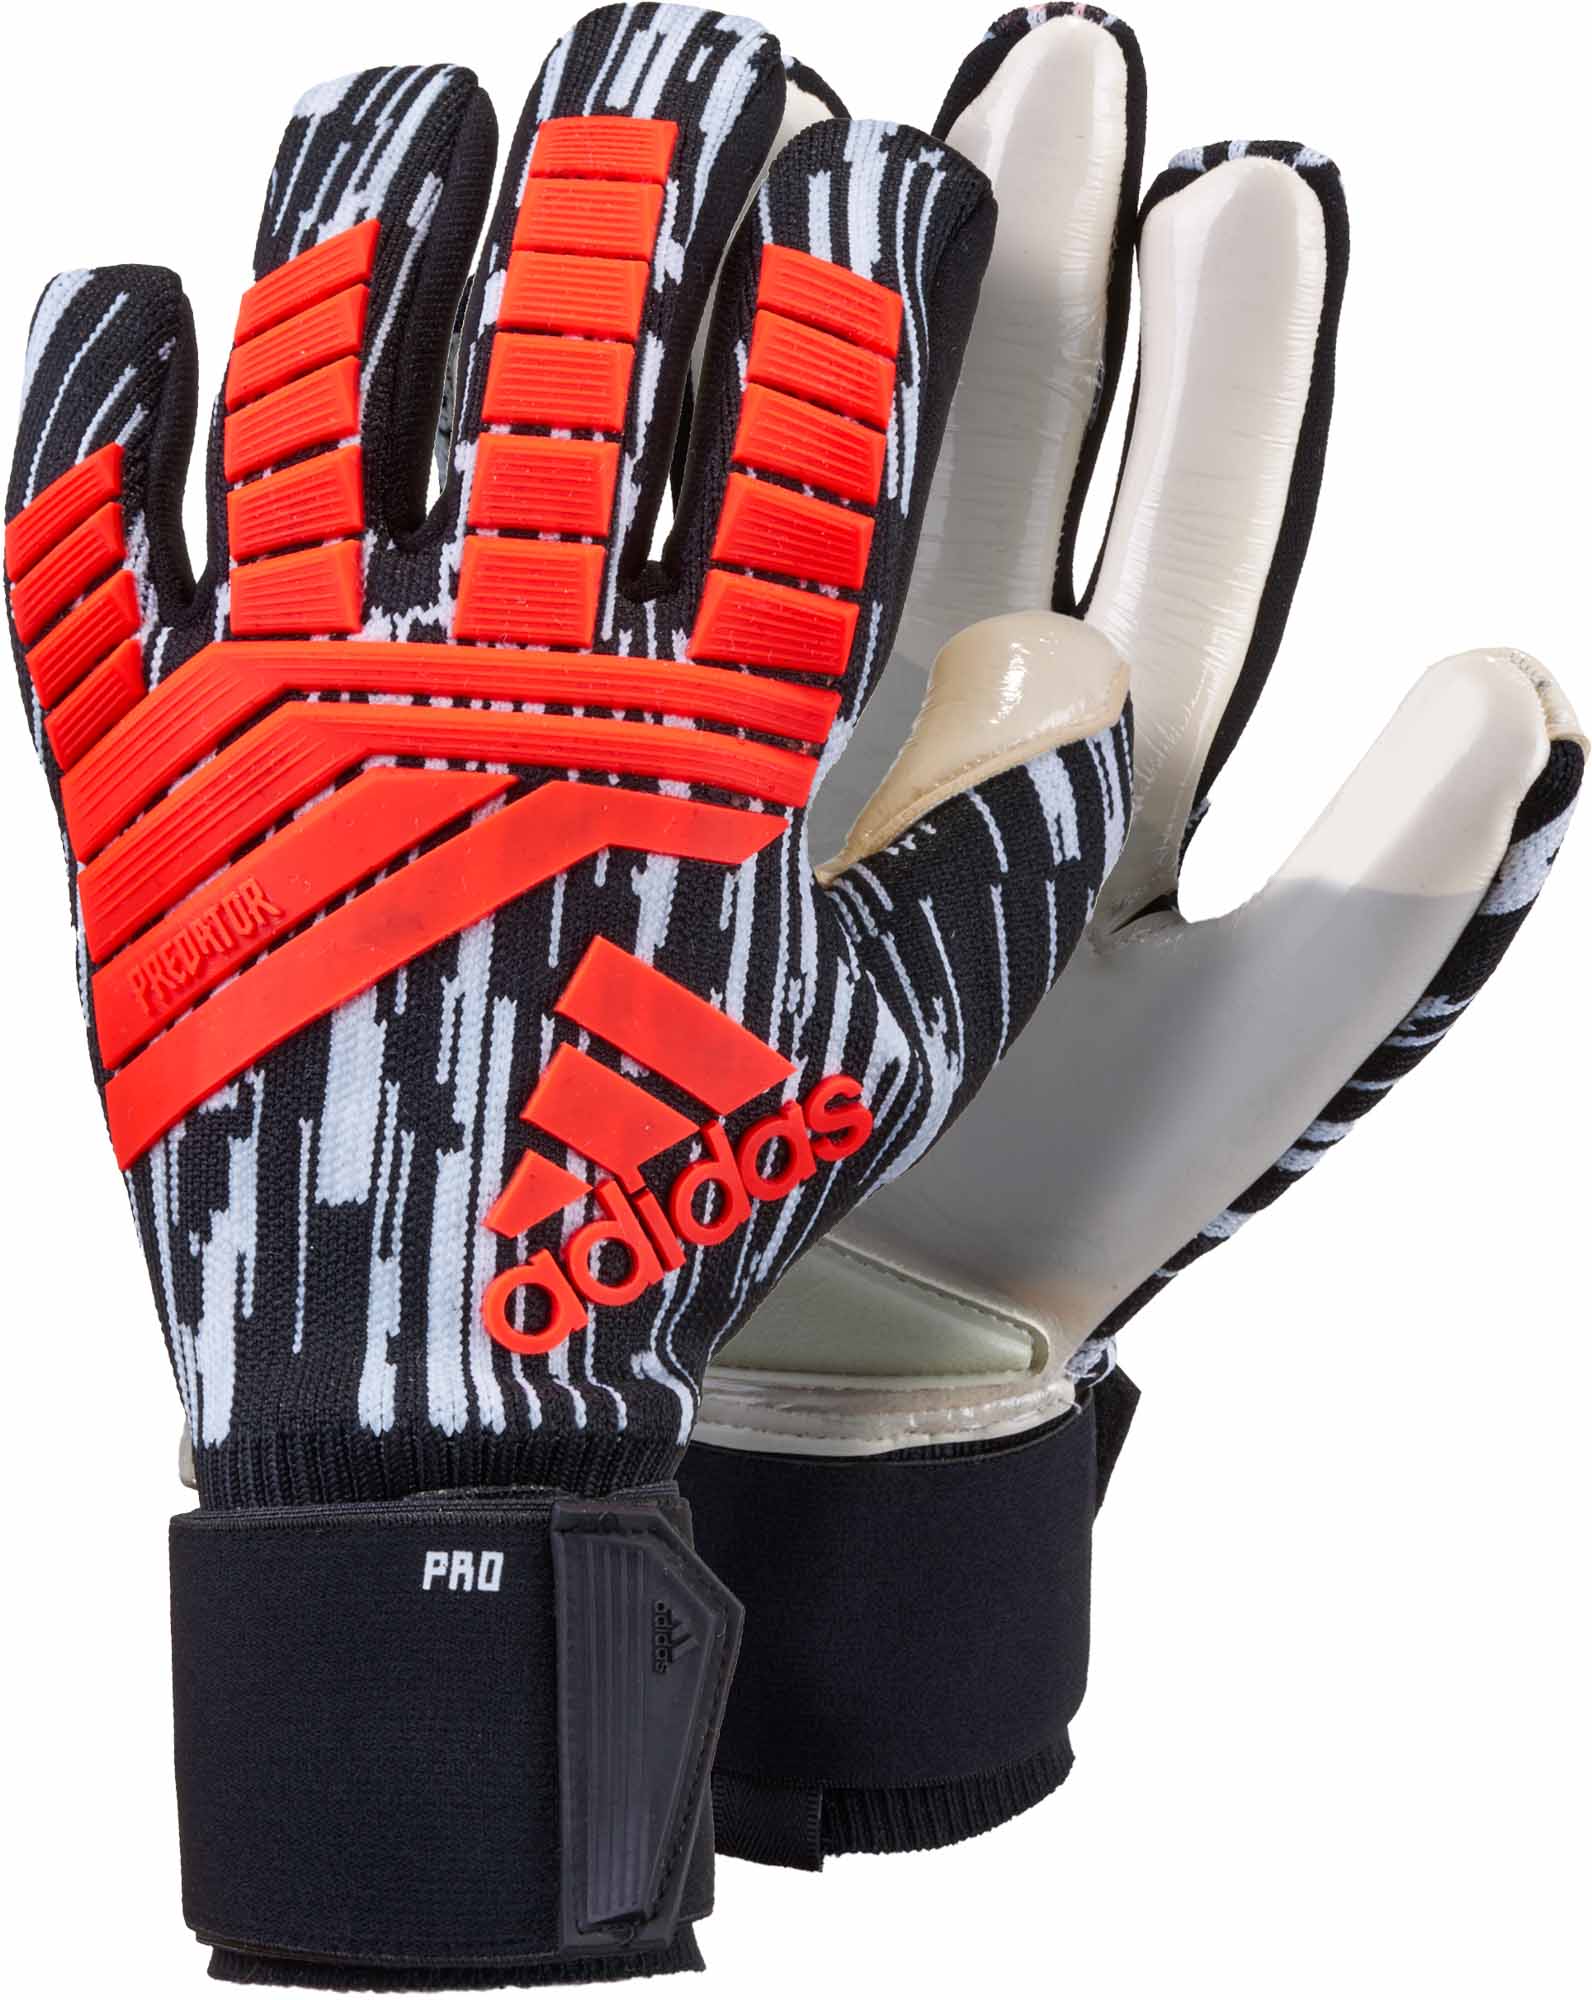 red and black goalkeeper gloves